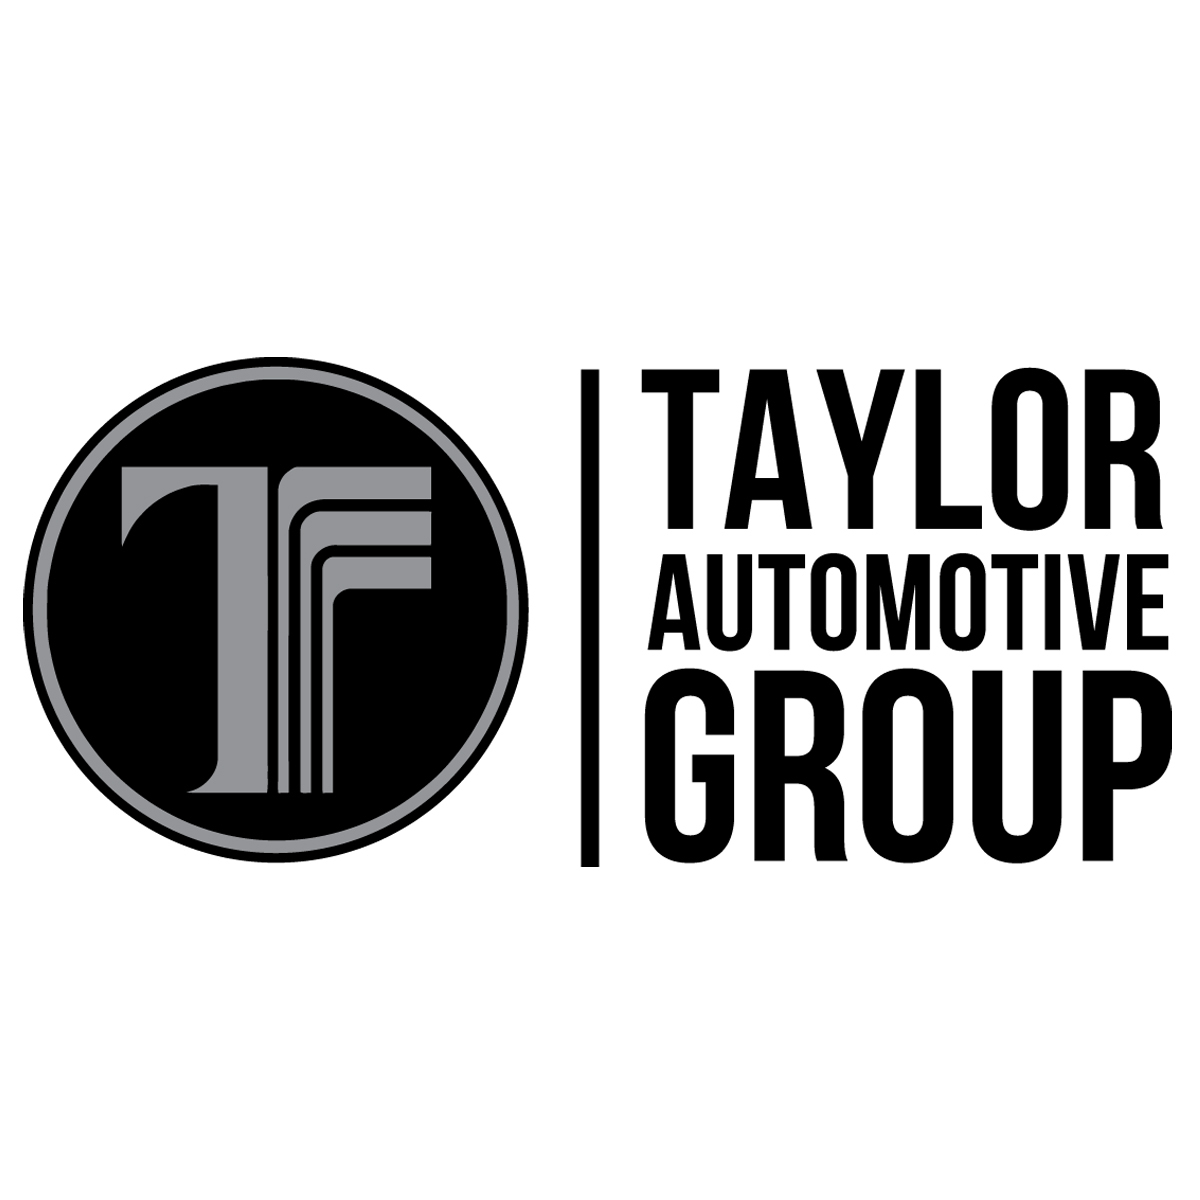 Taylor Automotive Group